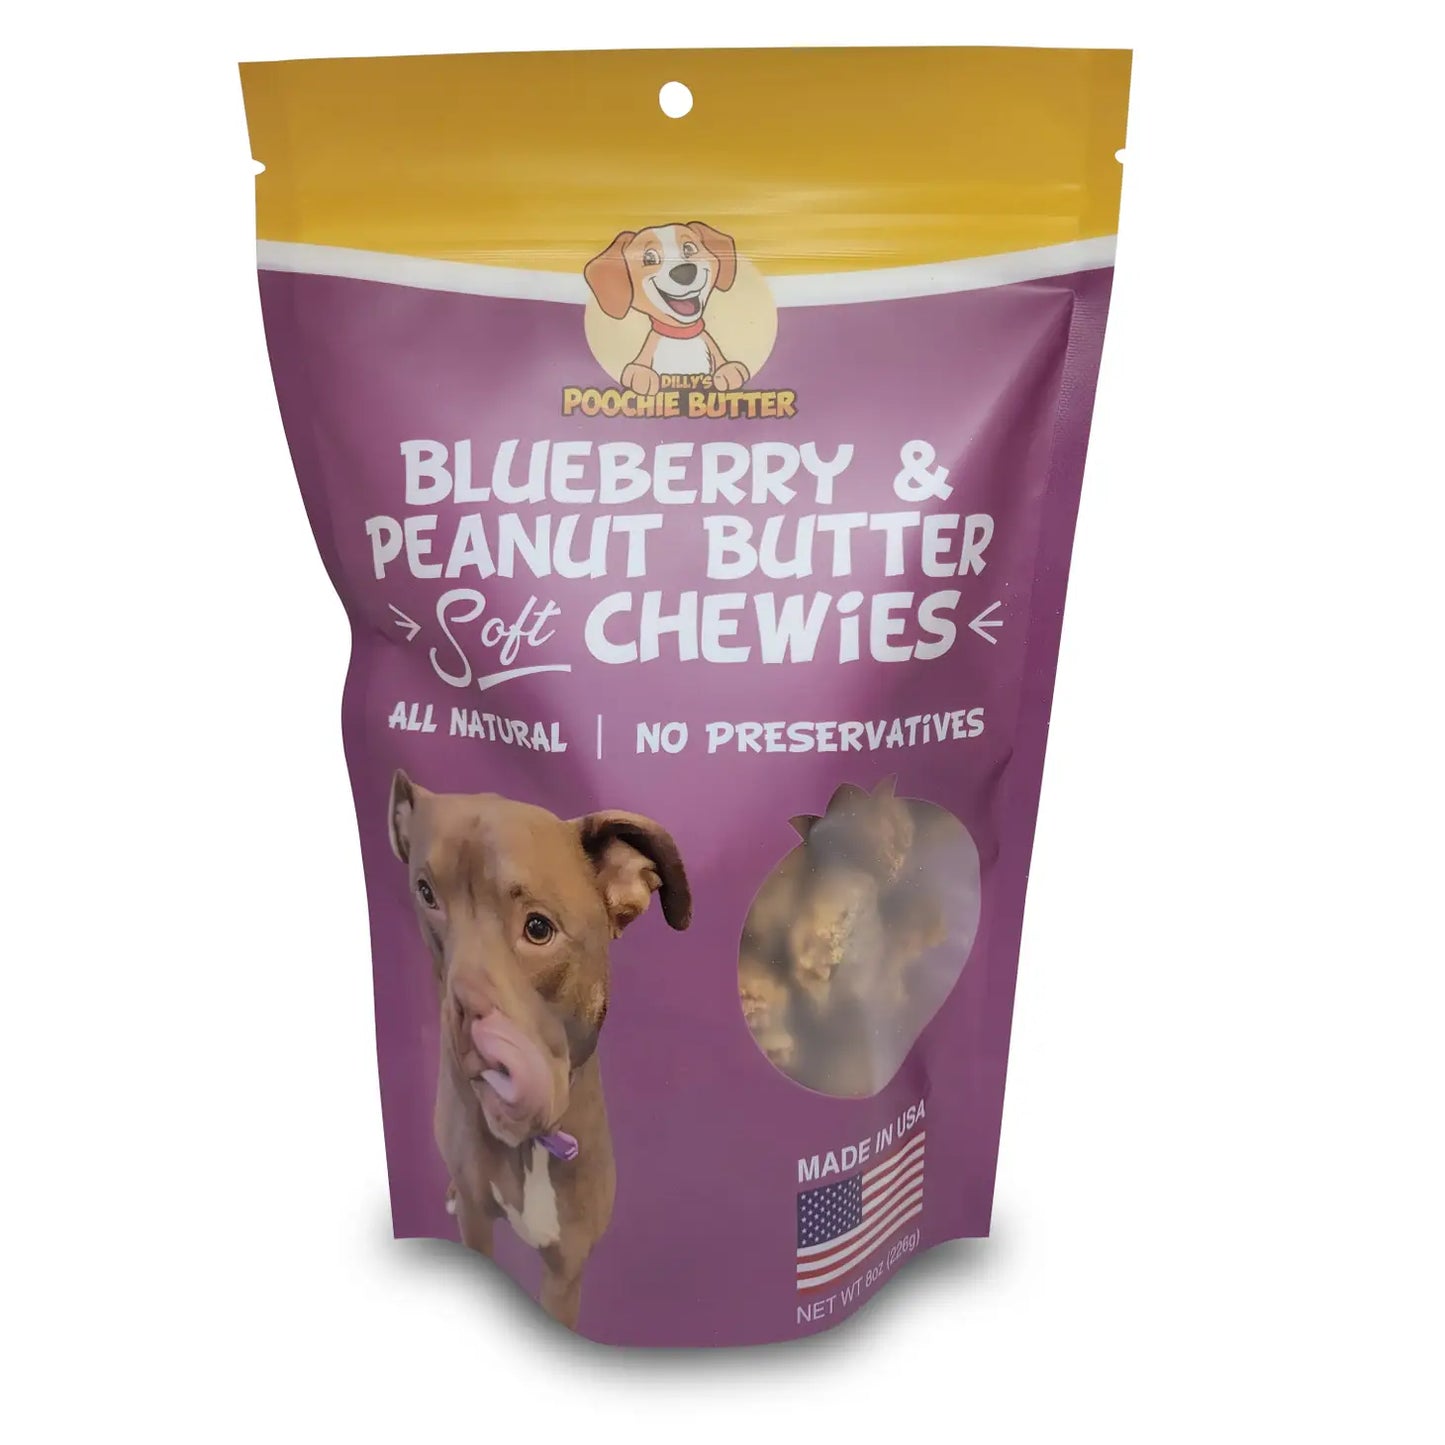 Poochie Butter Peanut Butter & Blueberry Soft Chewies 8oz